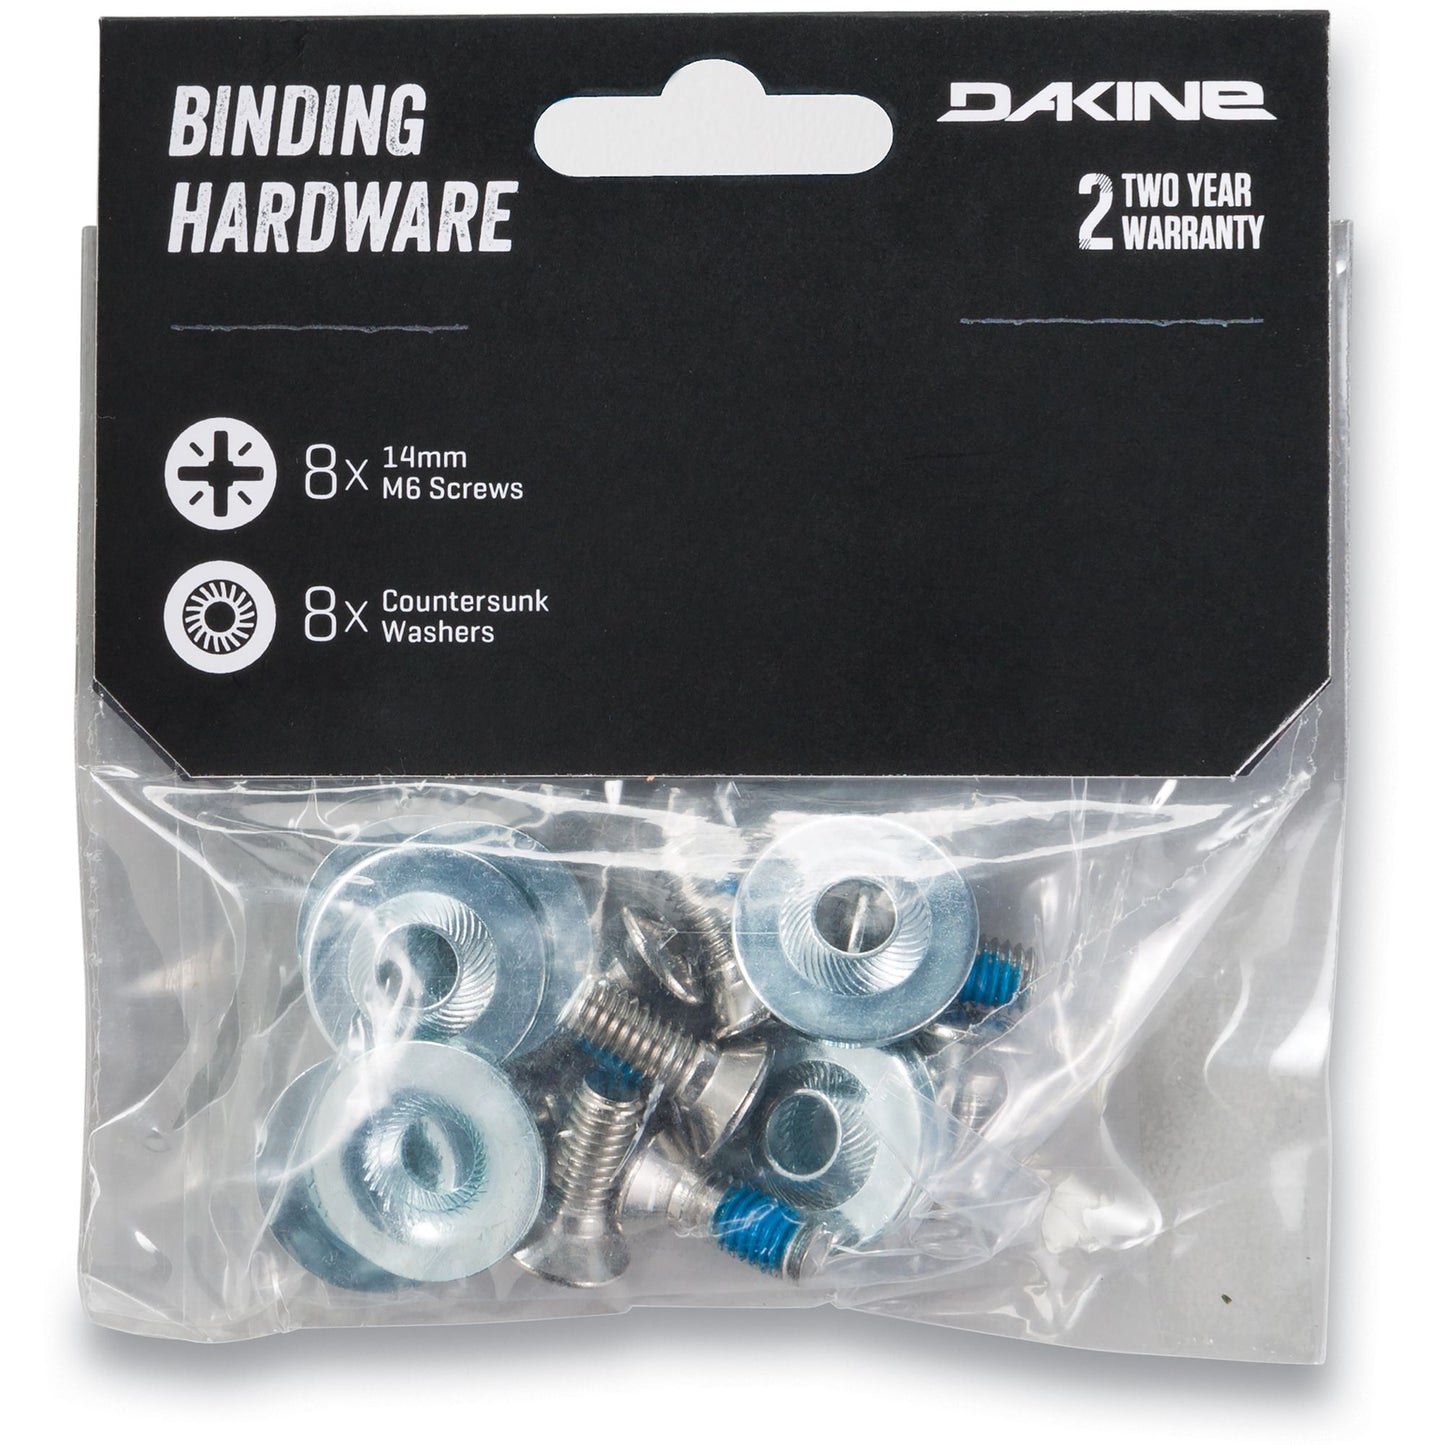 Dakine Binding Hardware Steel OS Snow Parts